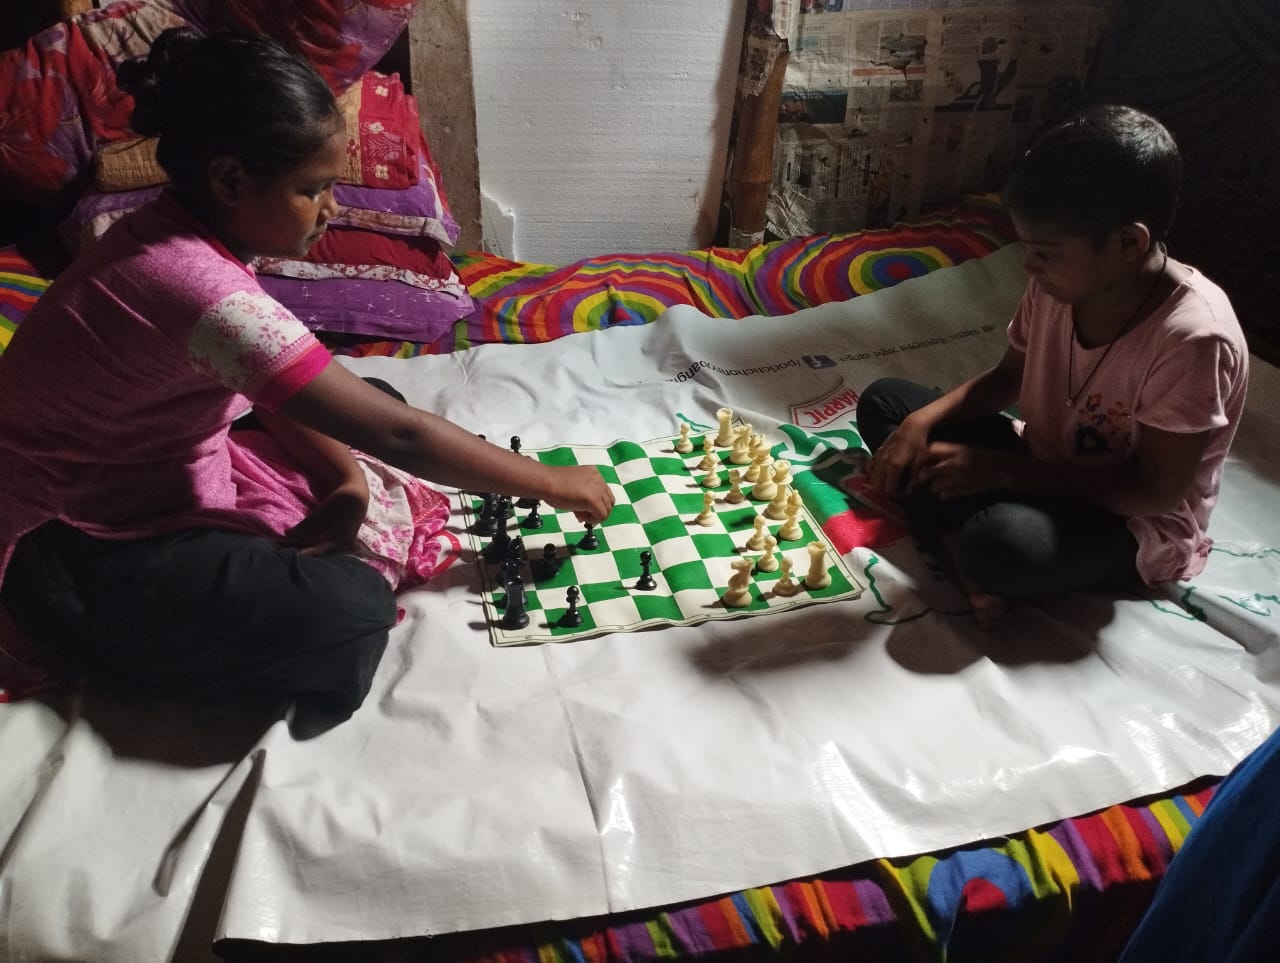 Moriam and Nusrat playing chess